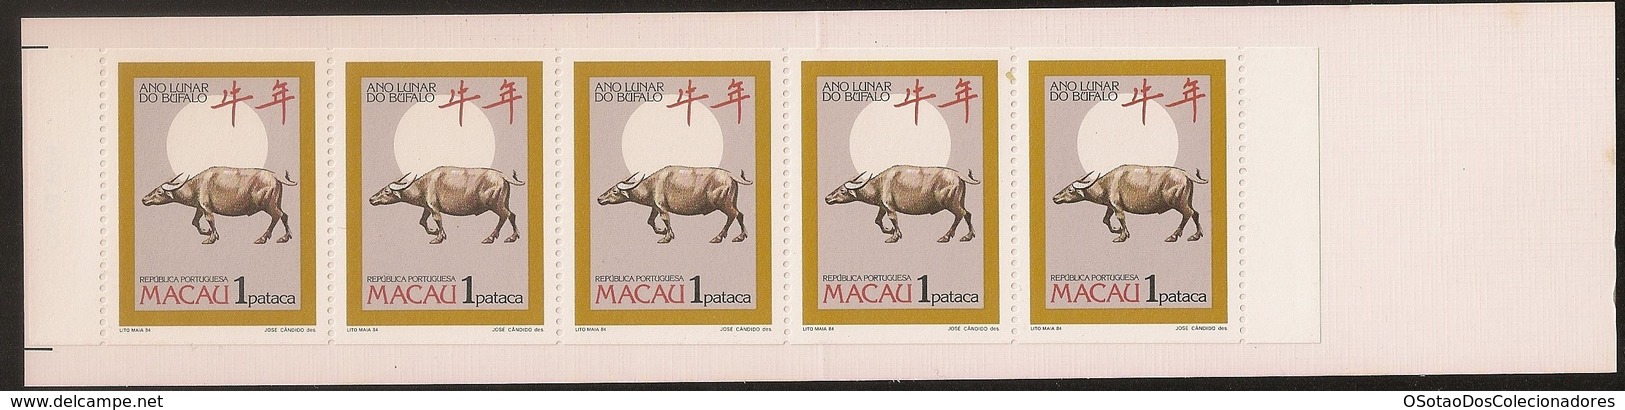 Macau Macao Chine Caderneta 1985 - Ano Lunar Do Bufalo - Chinese New Year - Year Of The Ox - MNH/Neuf - Libretti